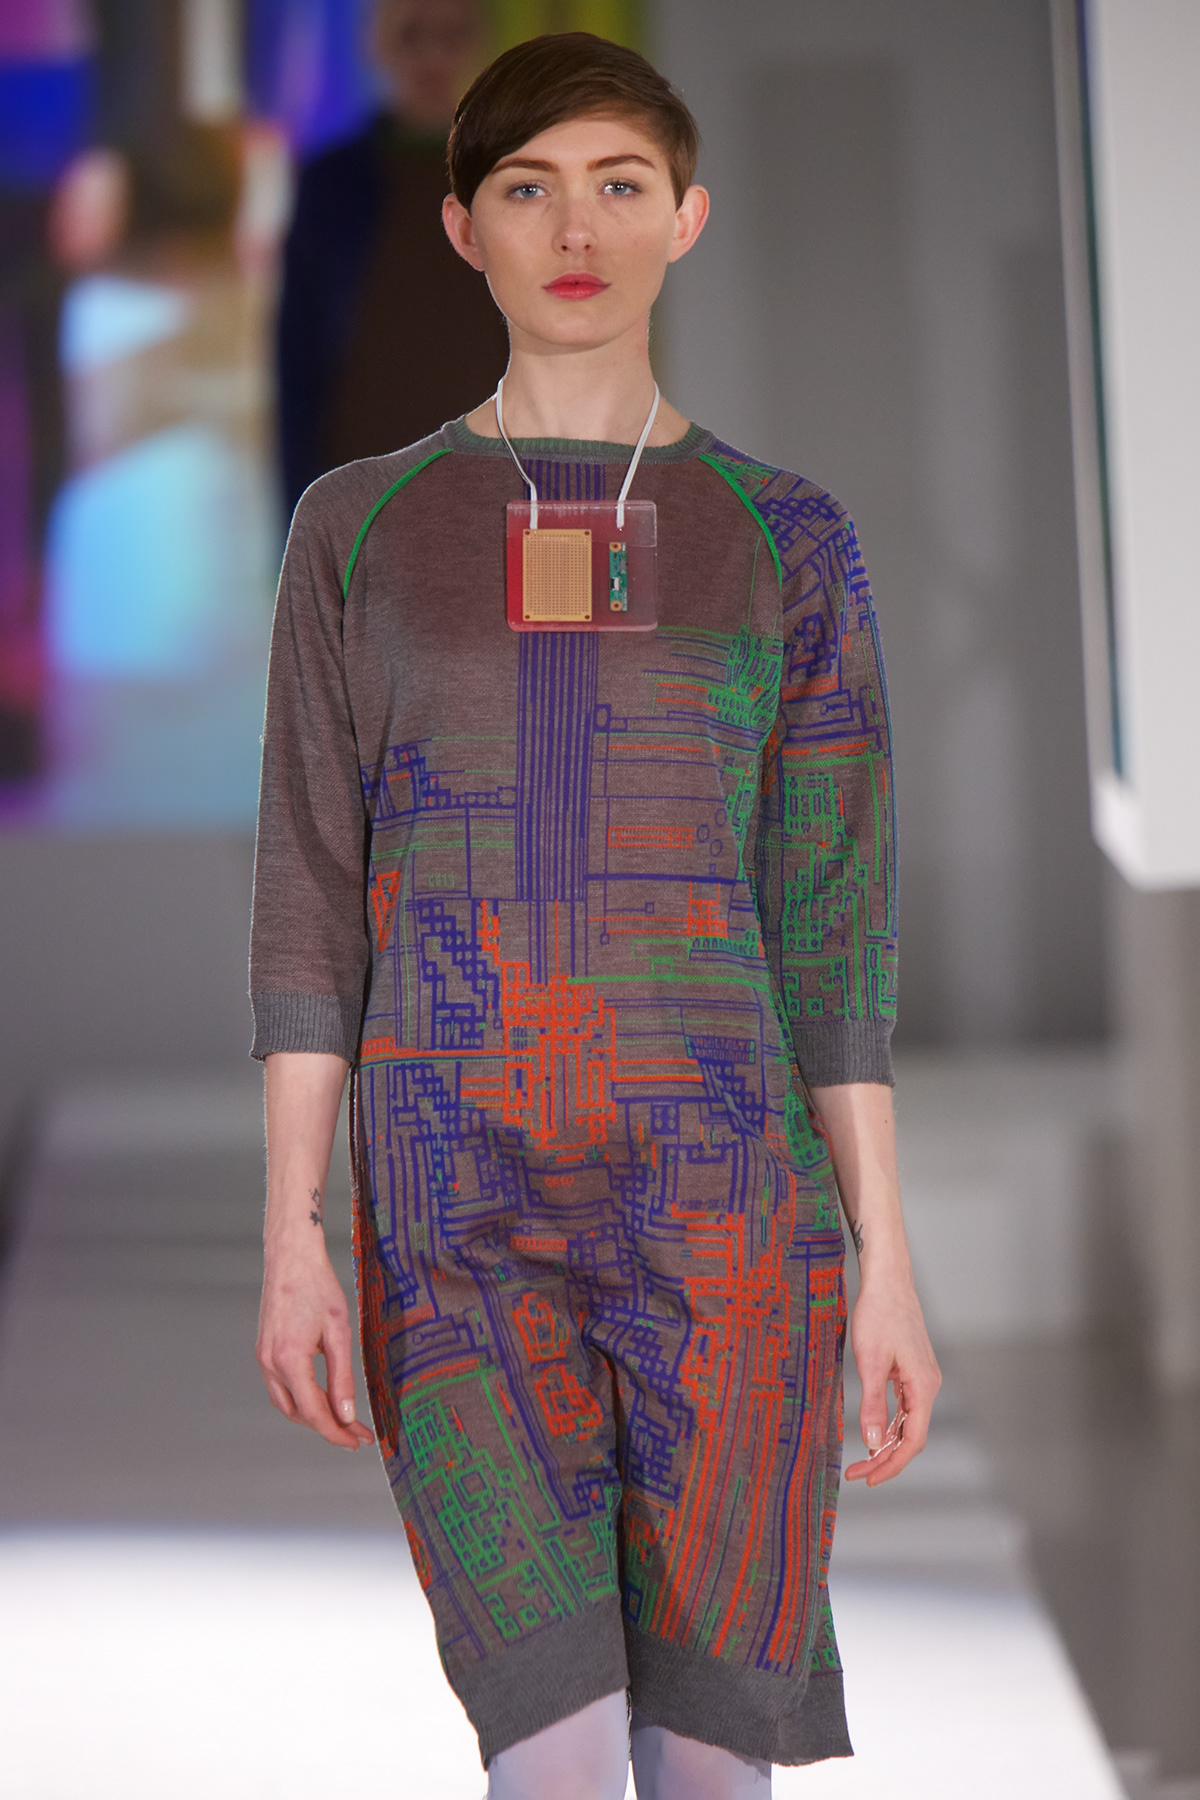 knitwear  textiles  fashion  cyborg  Superhuman  robot  colour  luxury  new designer  graduate  ntu